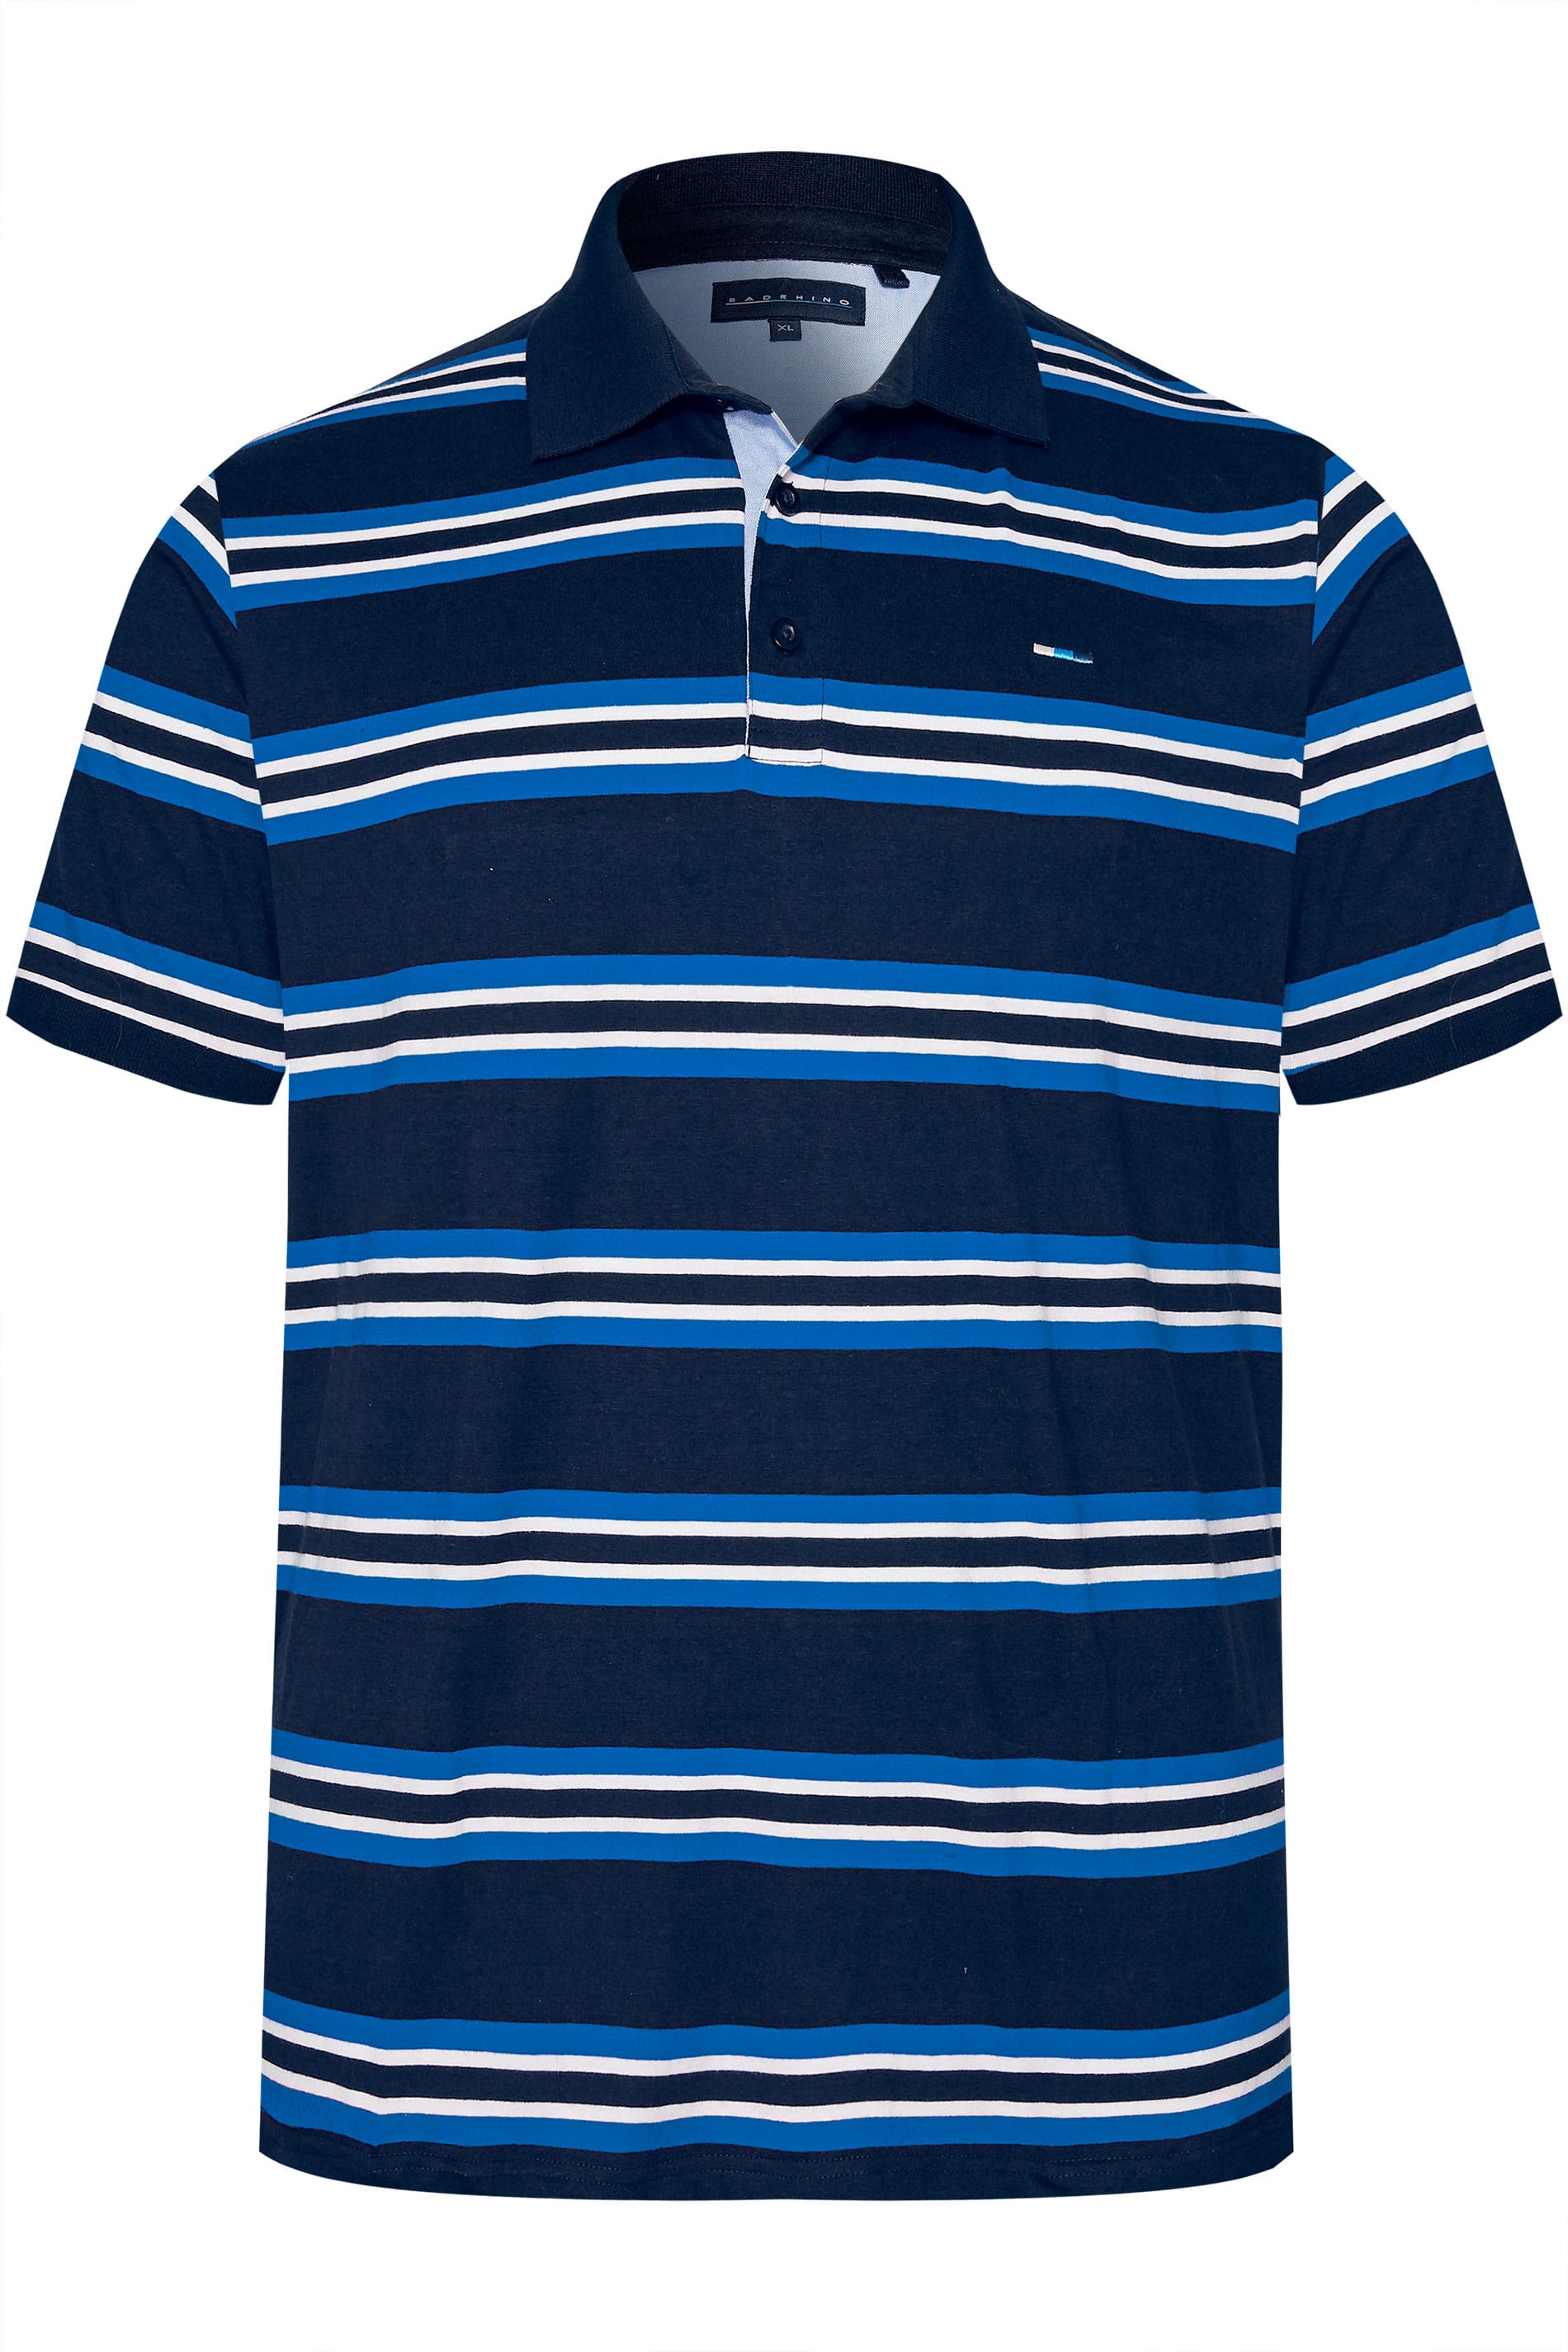 BadRhino Navy & Blue Striped Polo Shirt | BadRhino